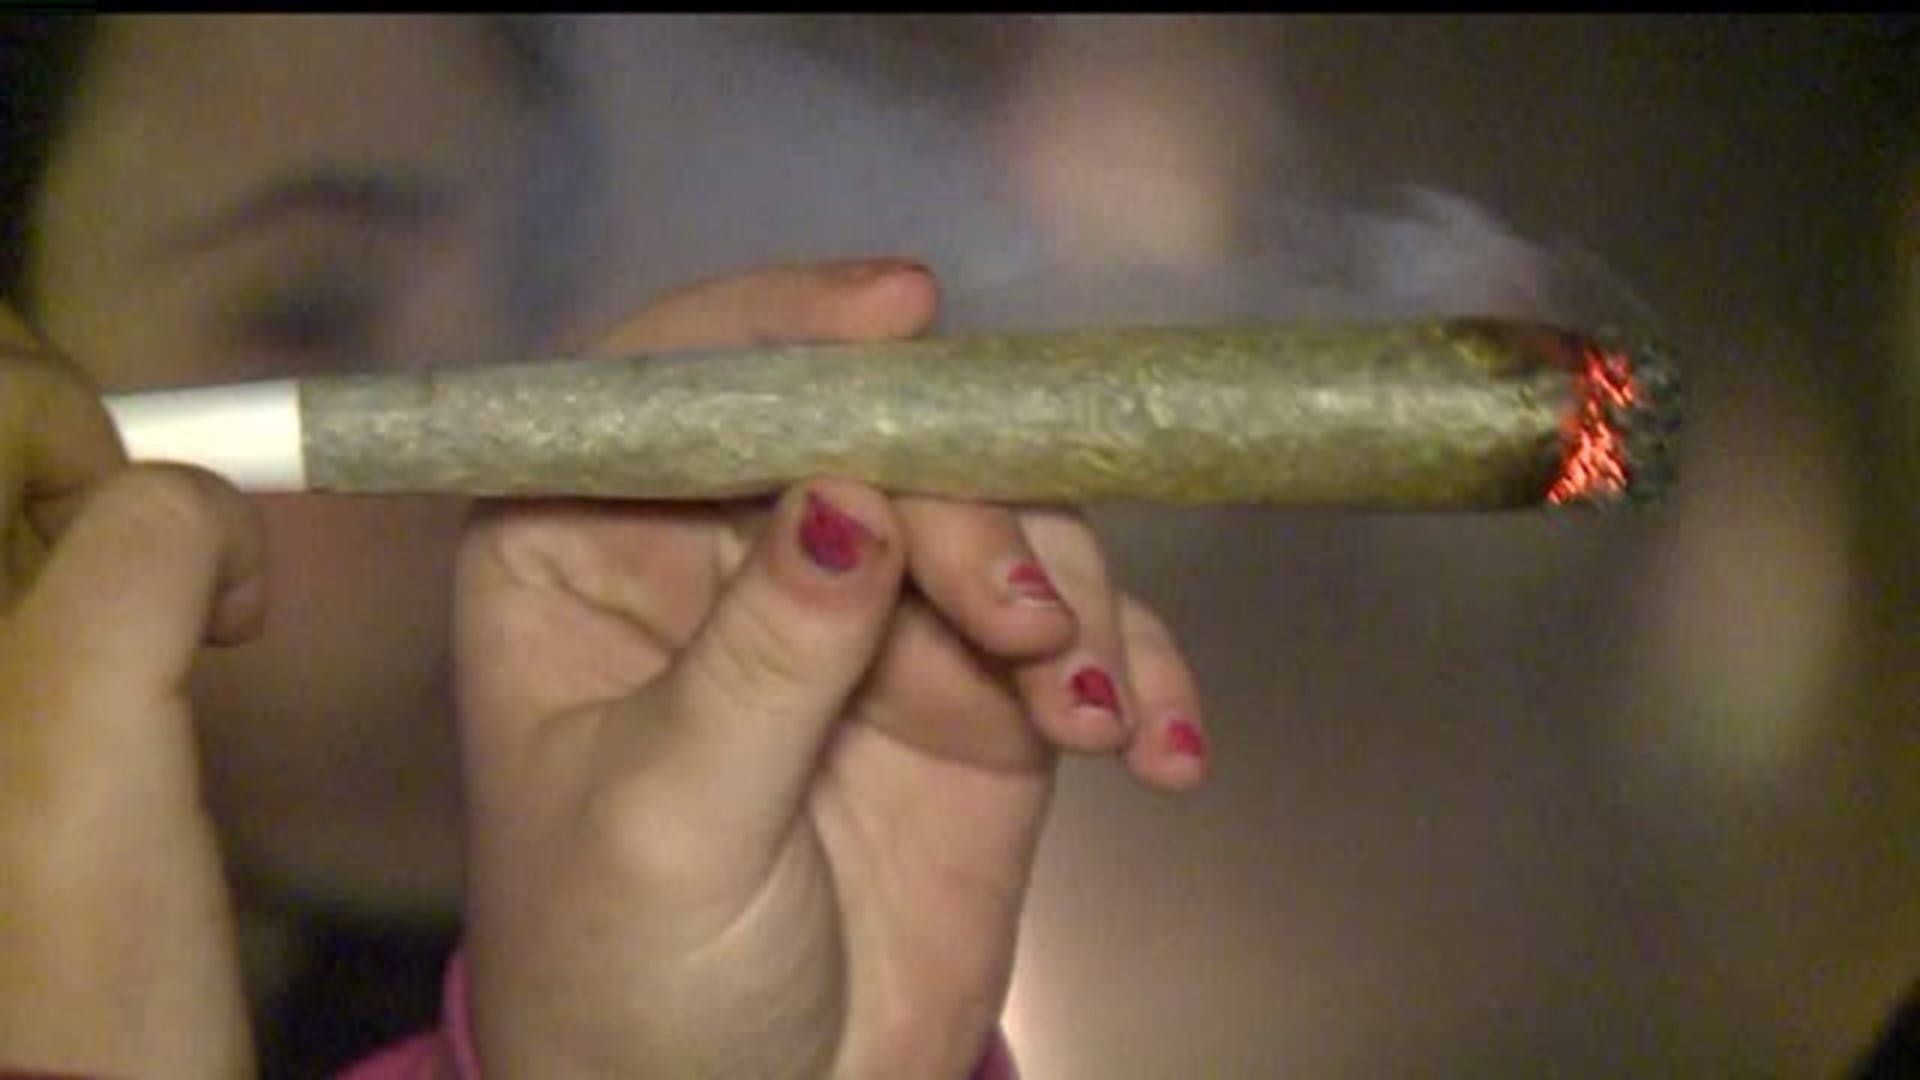 Lower penalties for marijuana possession bill advances to Harrisburg committee